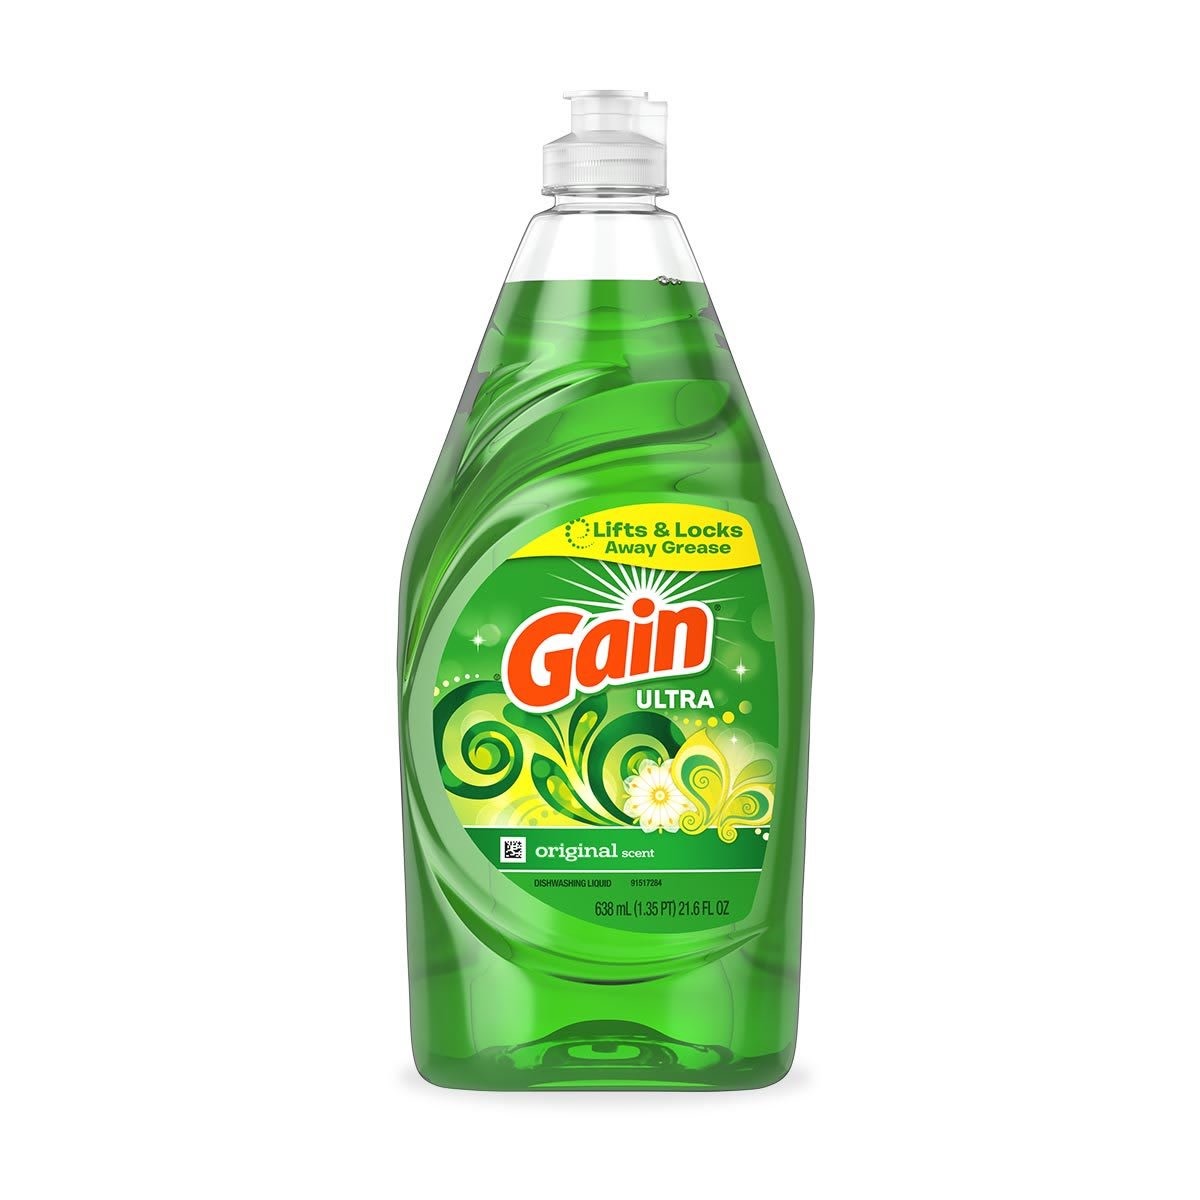 Detergente líquido para platos Gain Original